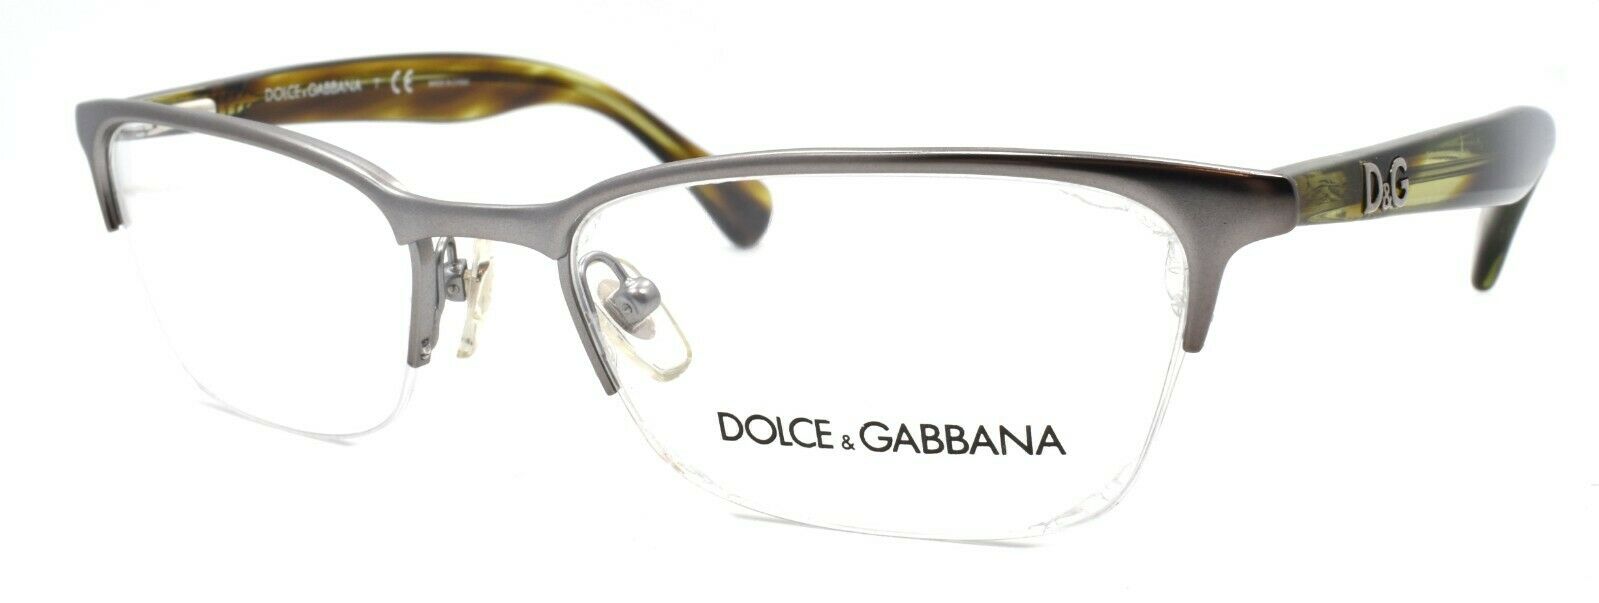 1-Dolce & Gabbana DD 5113 1139 Women's Eyeglasses Half-rim 50-17-135 Gunmetal-679420525679-IKSpecs